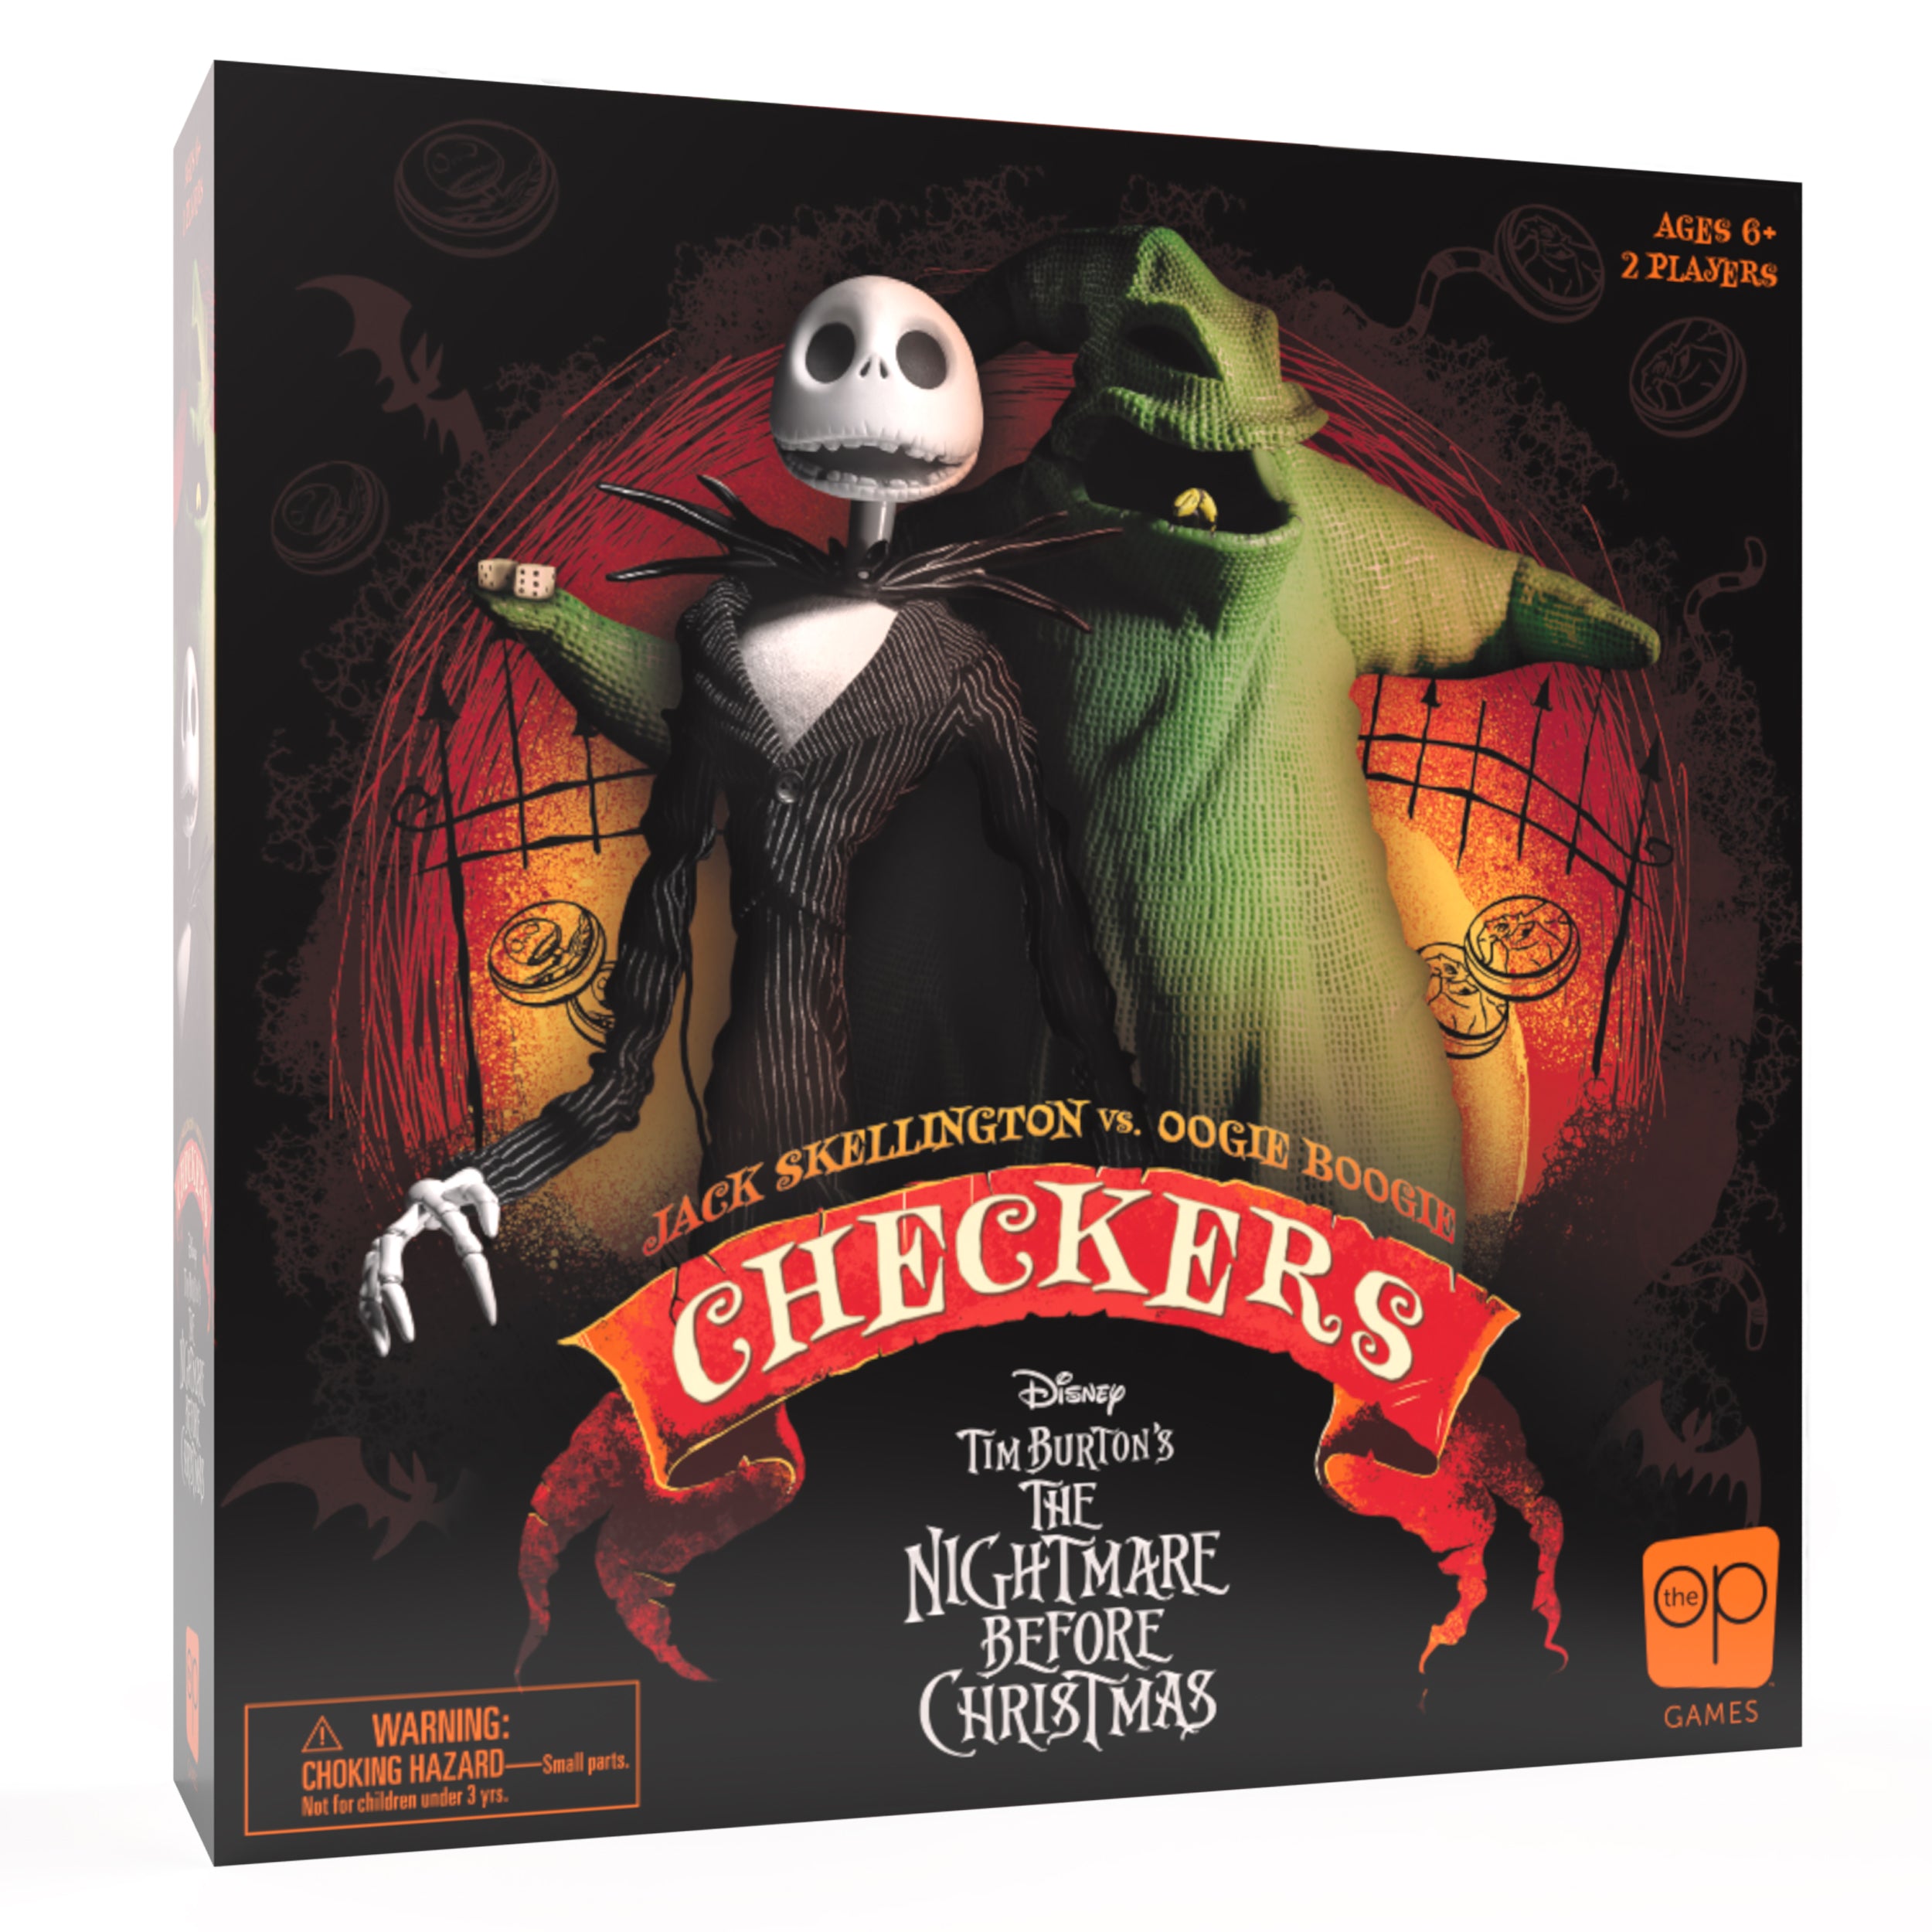 Checkers: Disney Tim Burton The Nightmare Before Christmas – The